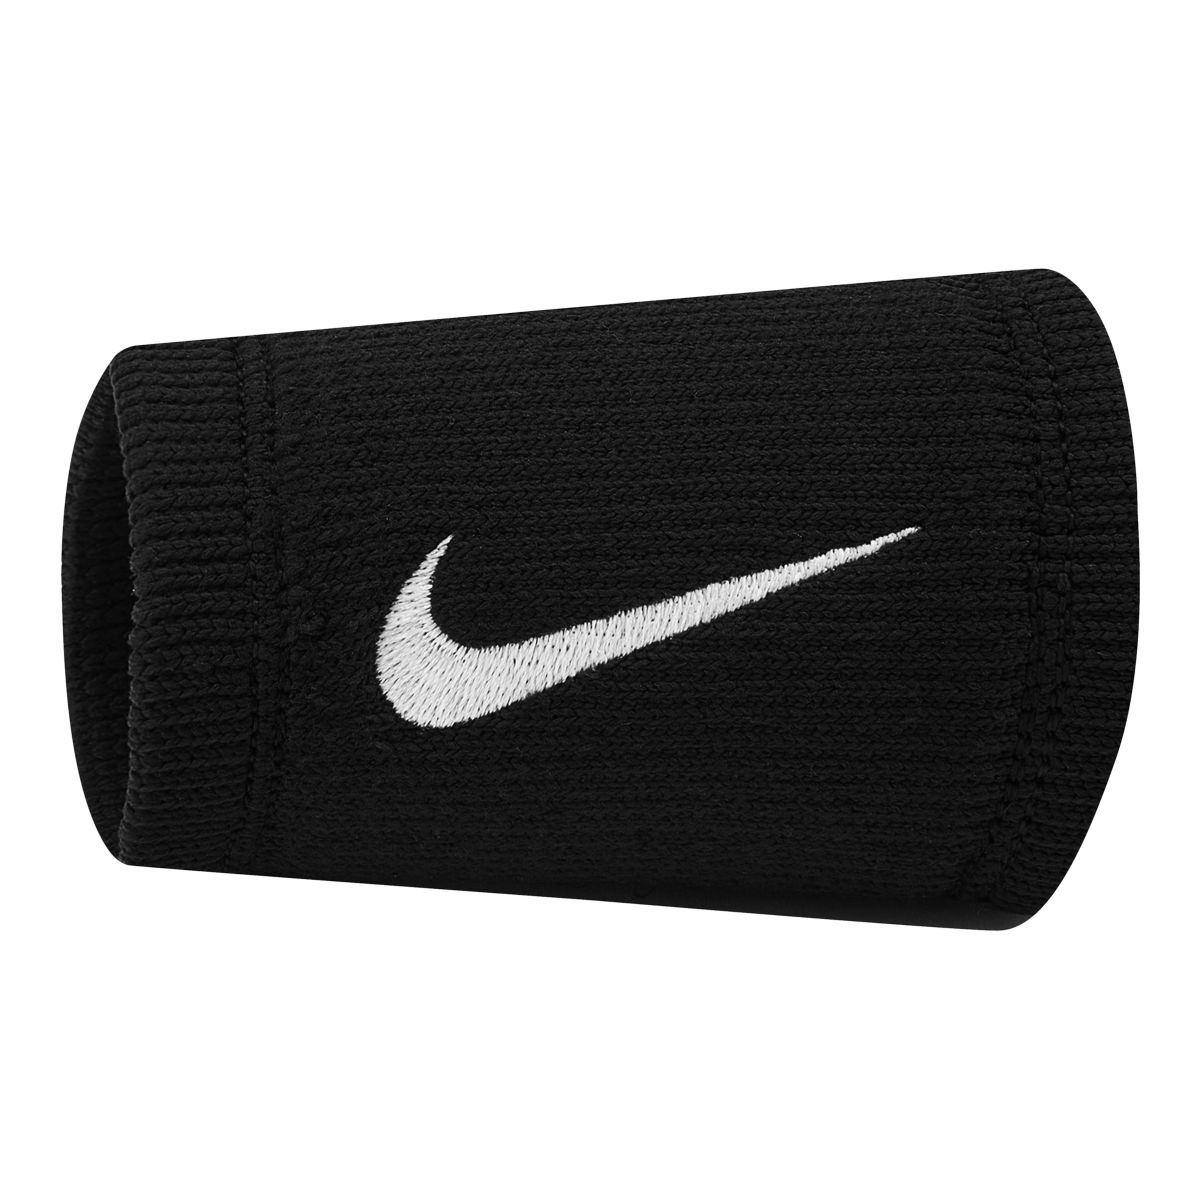 Nike Men's Elite Doublewide Wristbands - 2 Pack